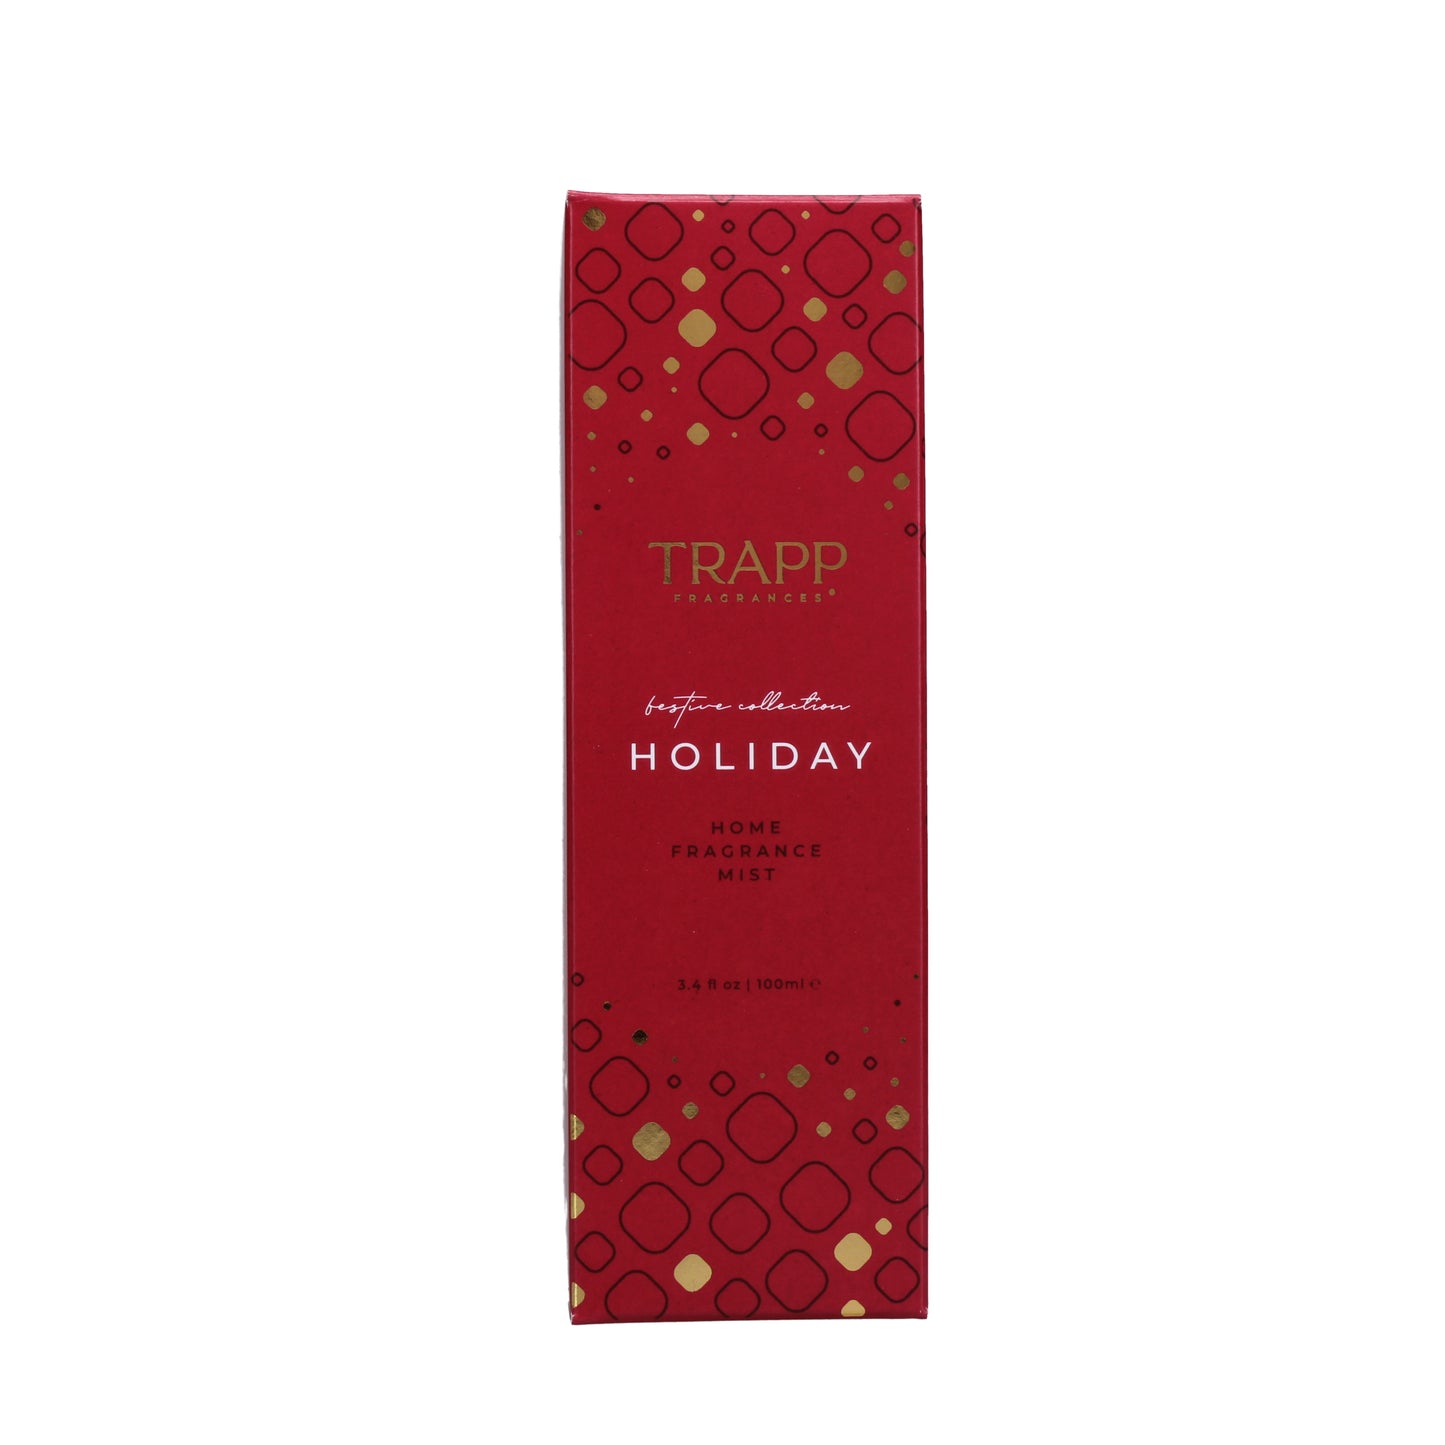 Seasonal Fragrance Mist Holiday 3.4 oz.